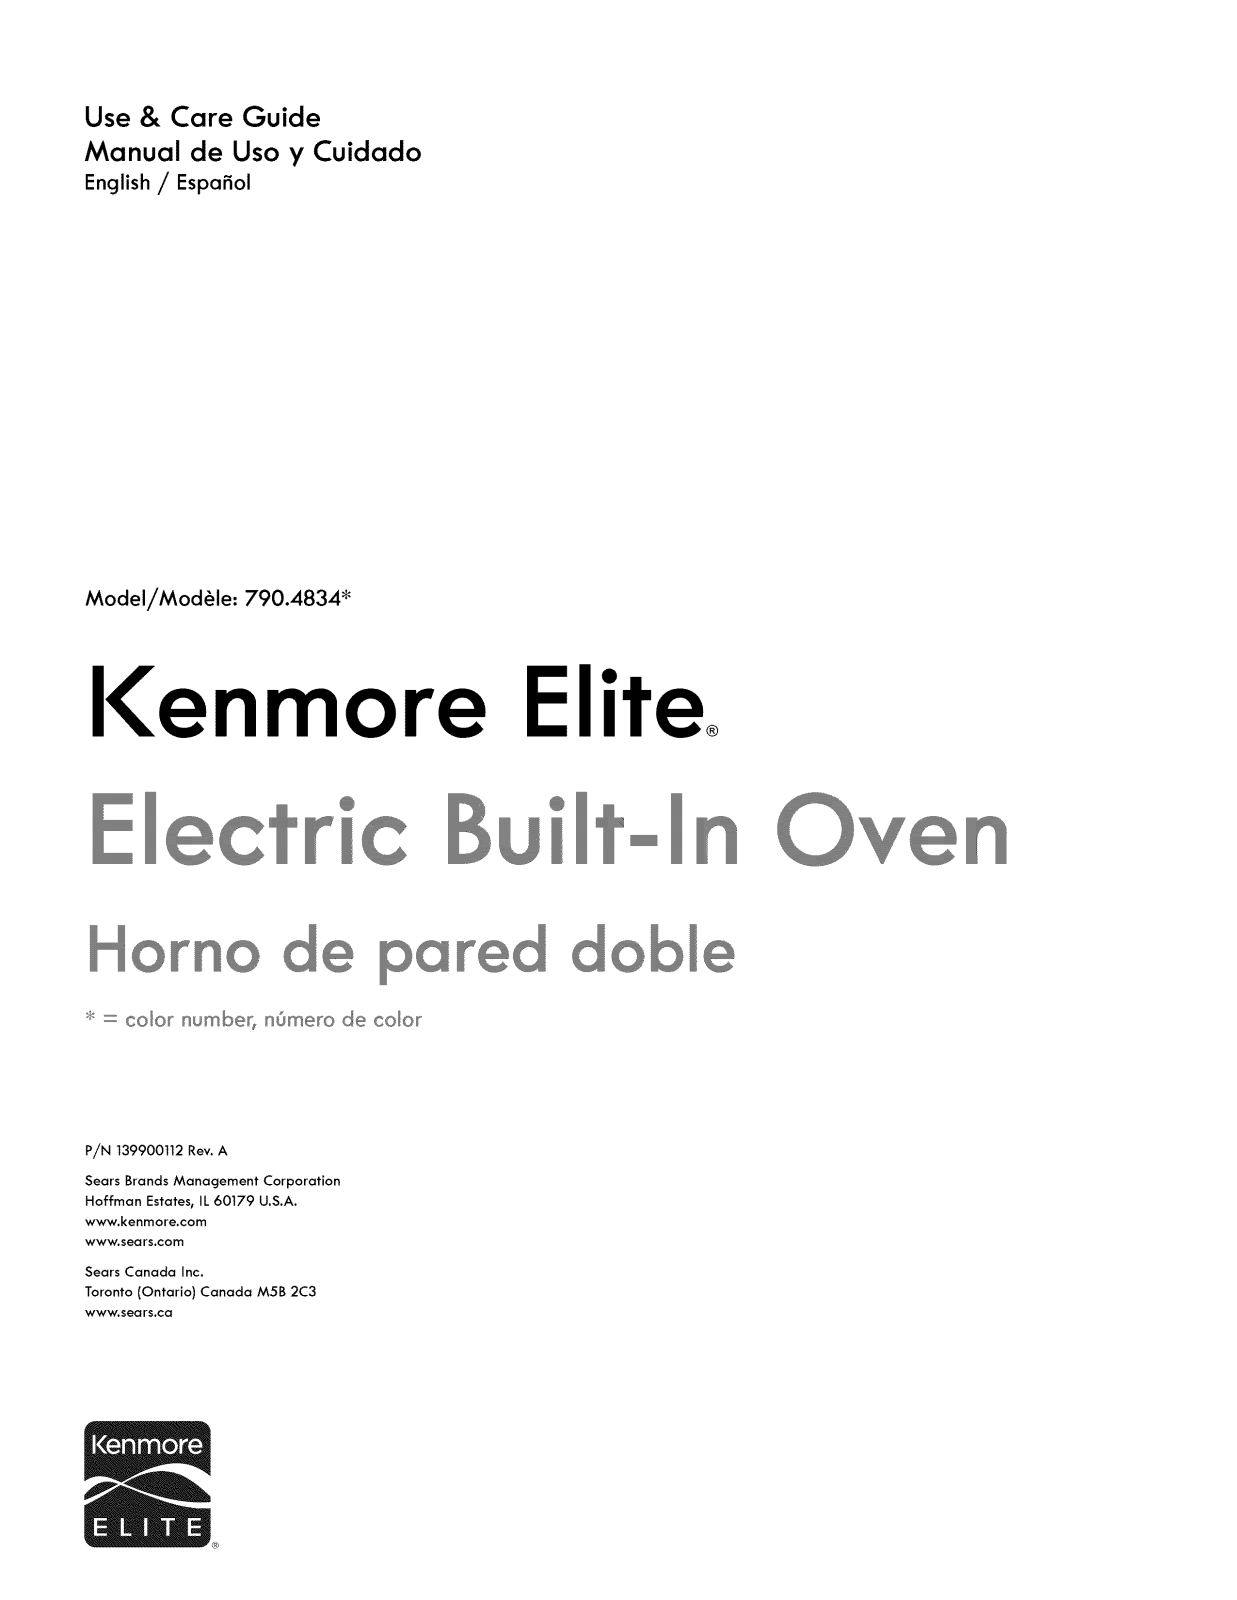 Kenmore Elite 79048349411, 79048349410, 79048343412, 79048343411, 79048343410 Owner’s Manual